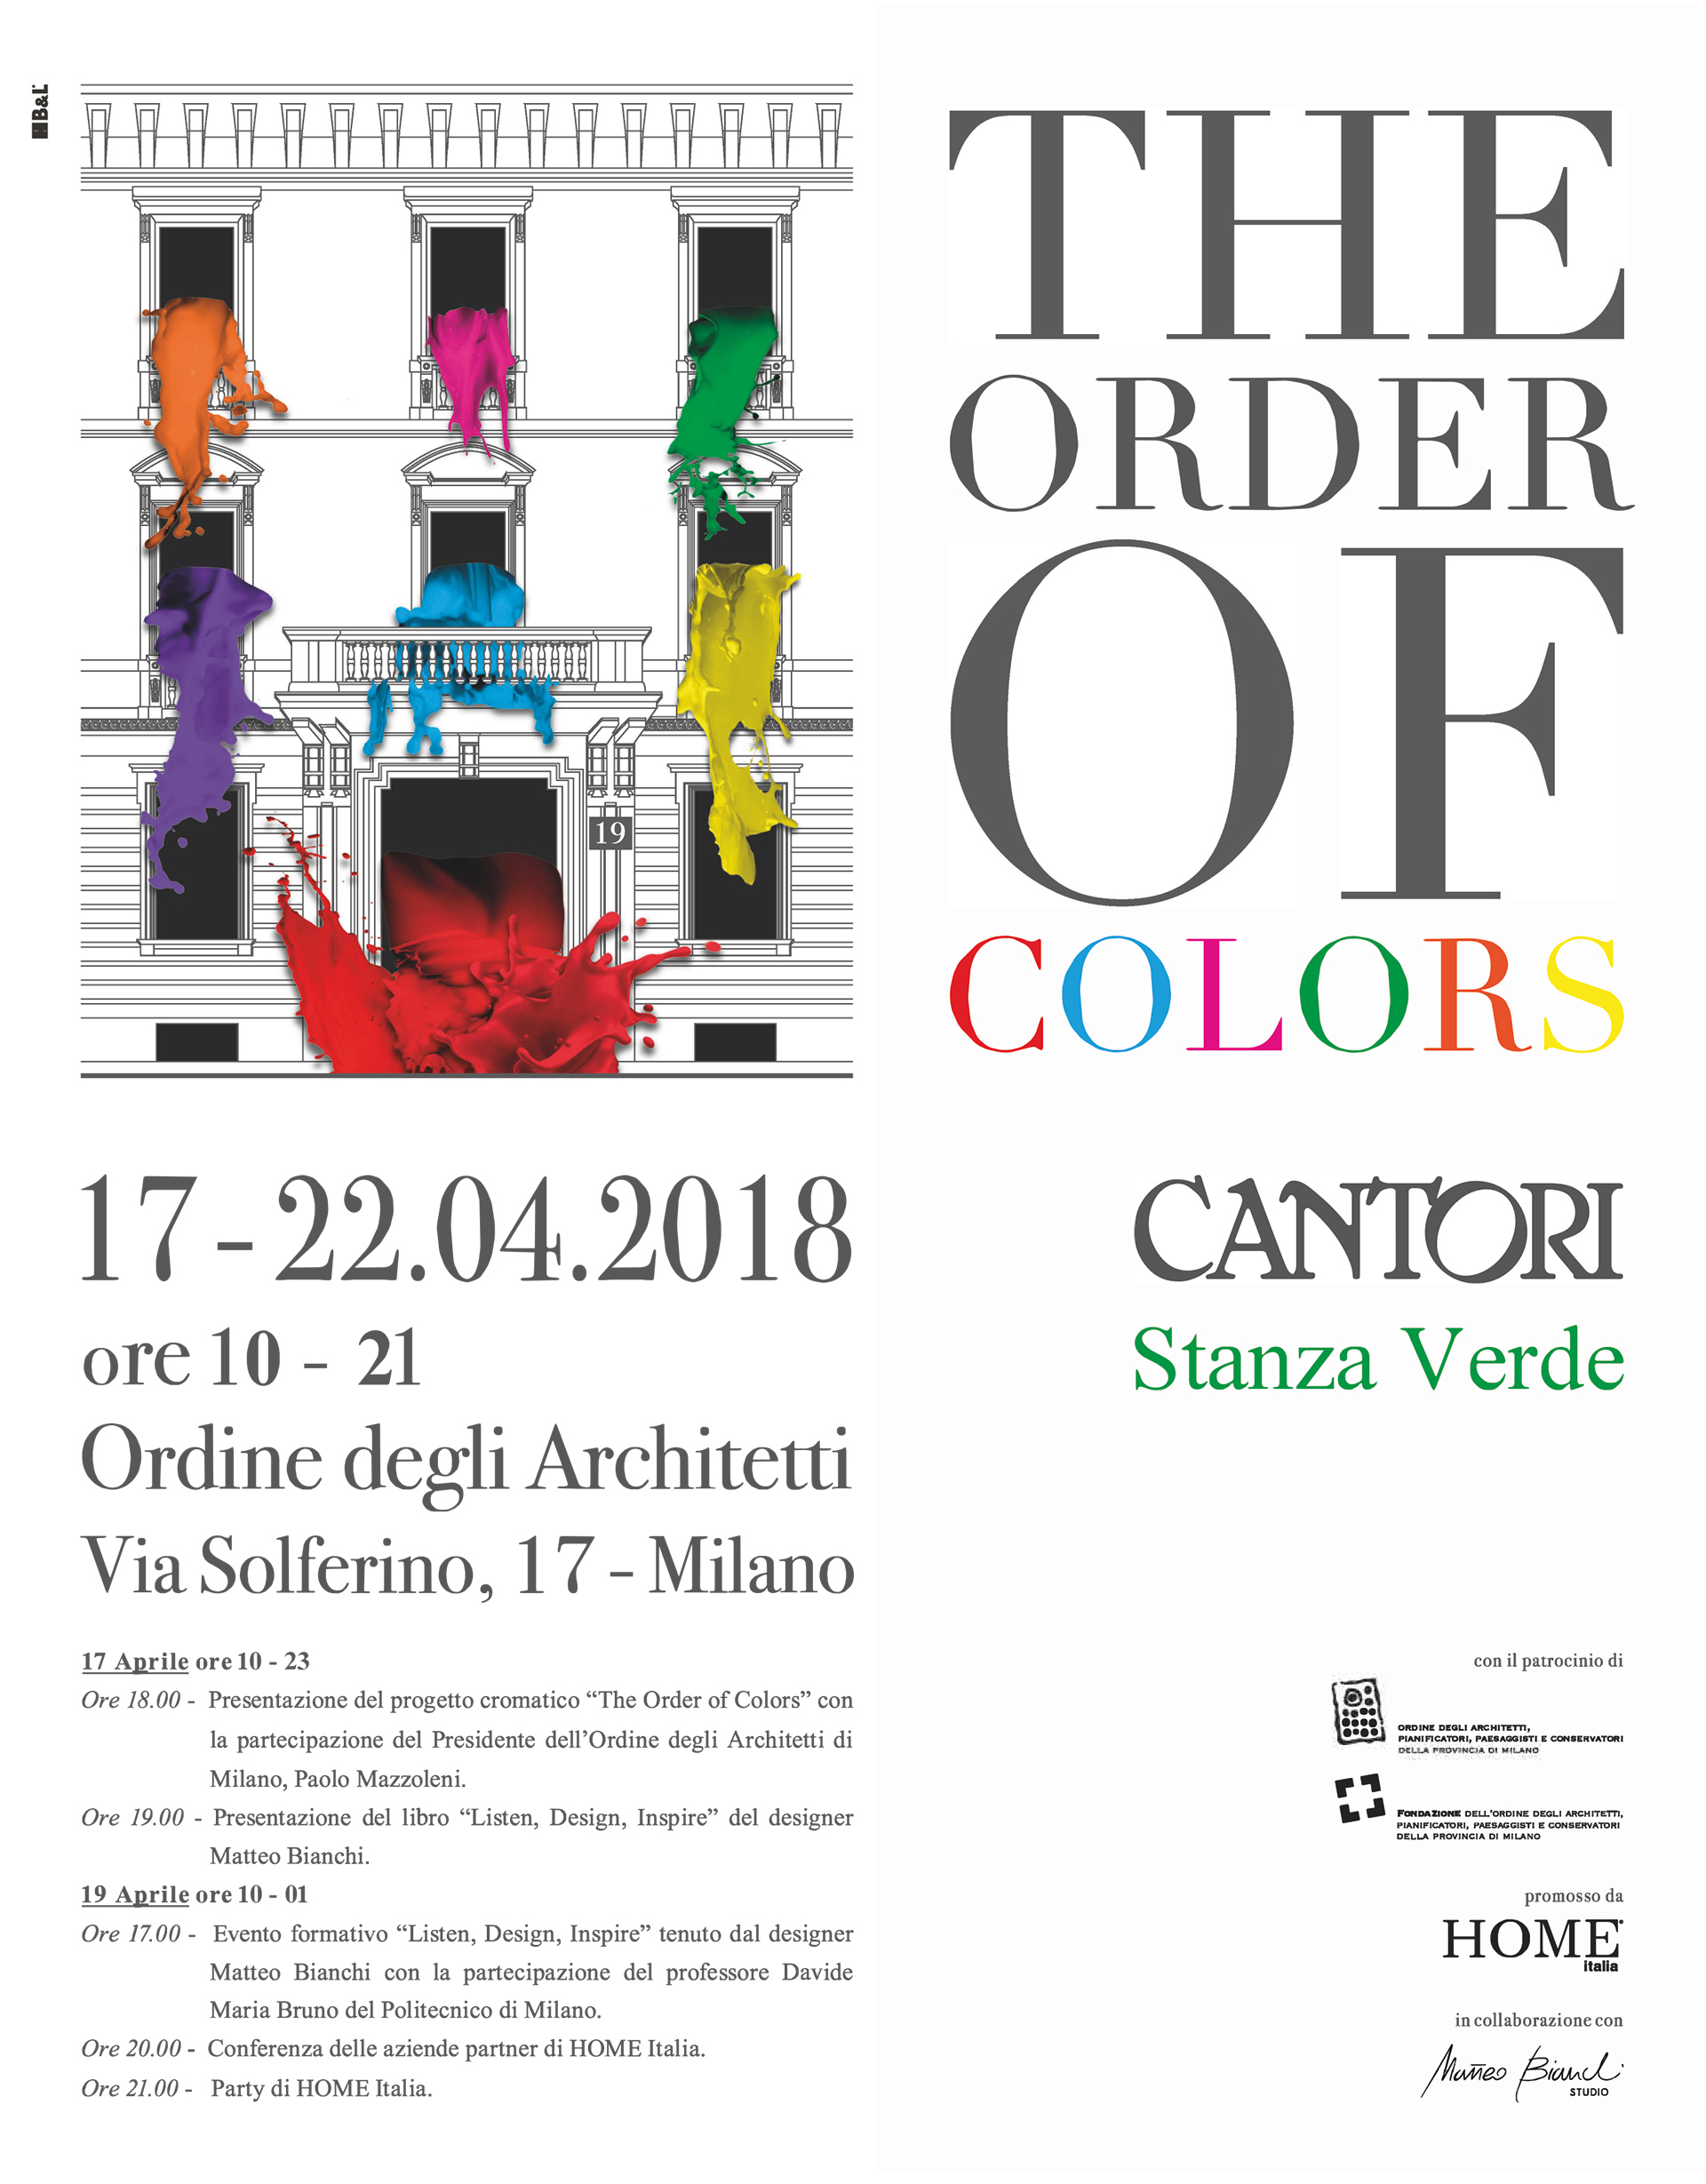 03/04/2018 Cantori at Fuori Salone event: The Order of Colors - Cantori